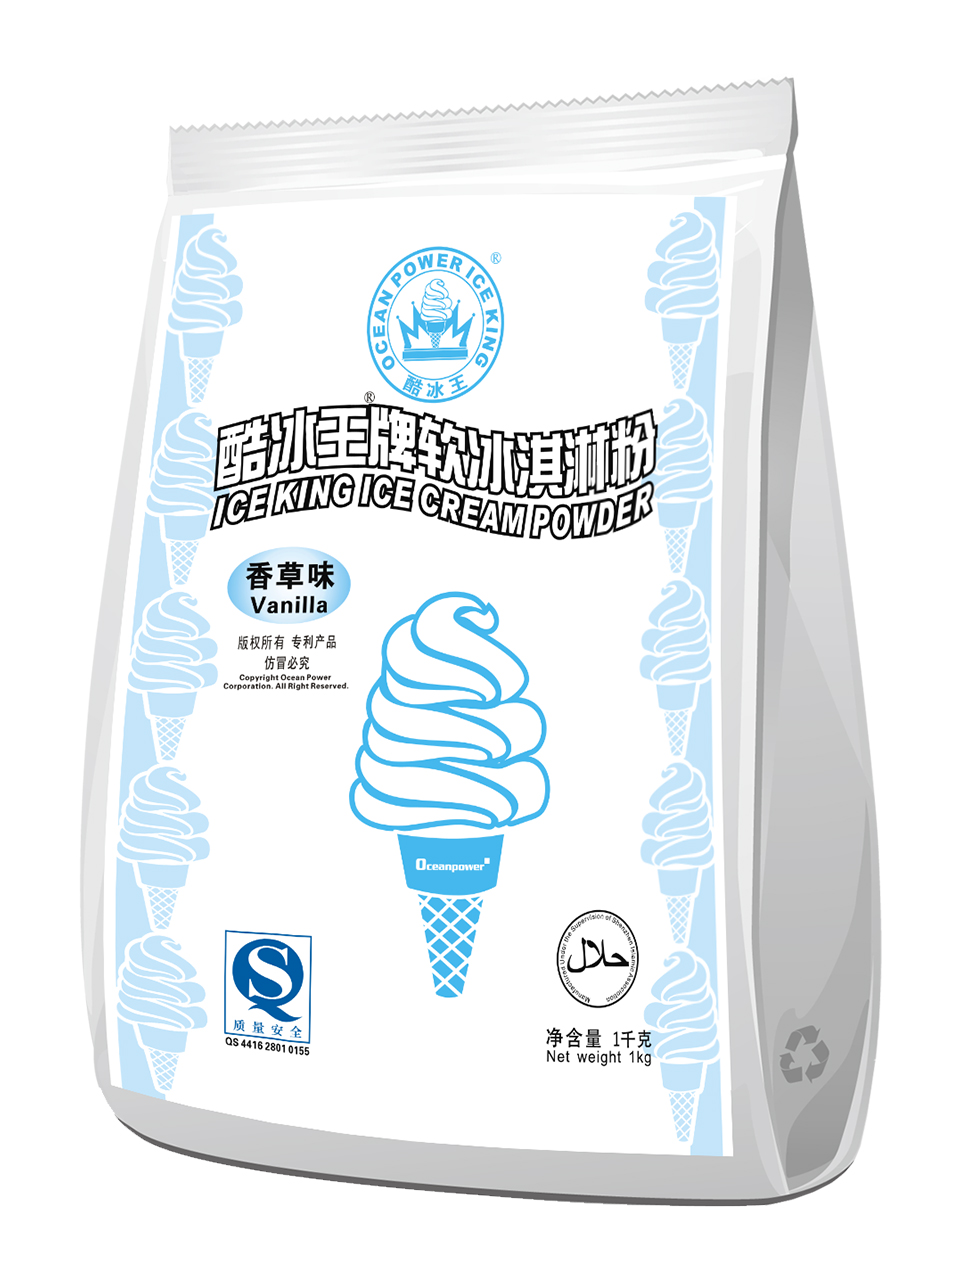 Soft Ice Cream Powder Mix Base 2kg LG10 makes 600 Liters Premium Ice Cream 